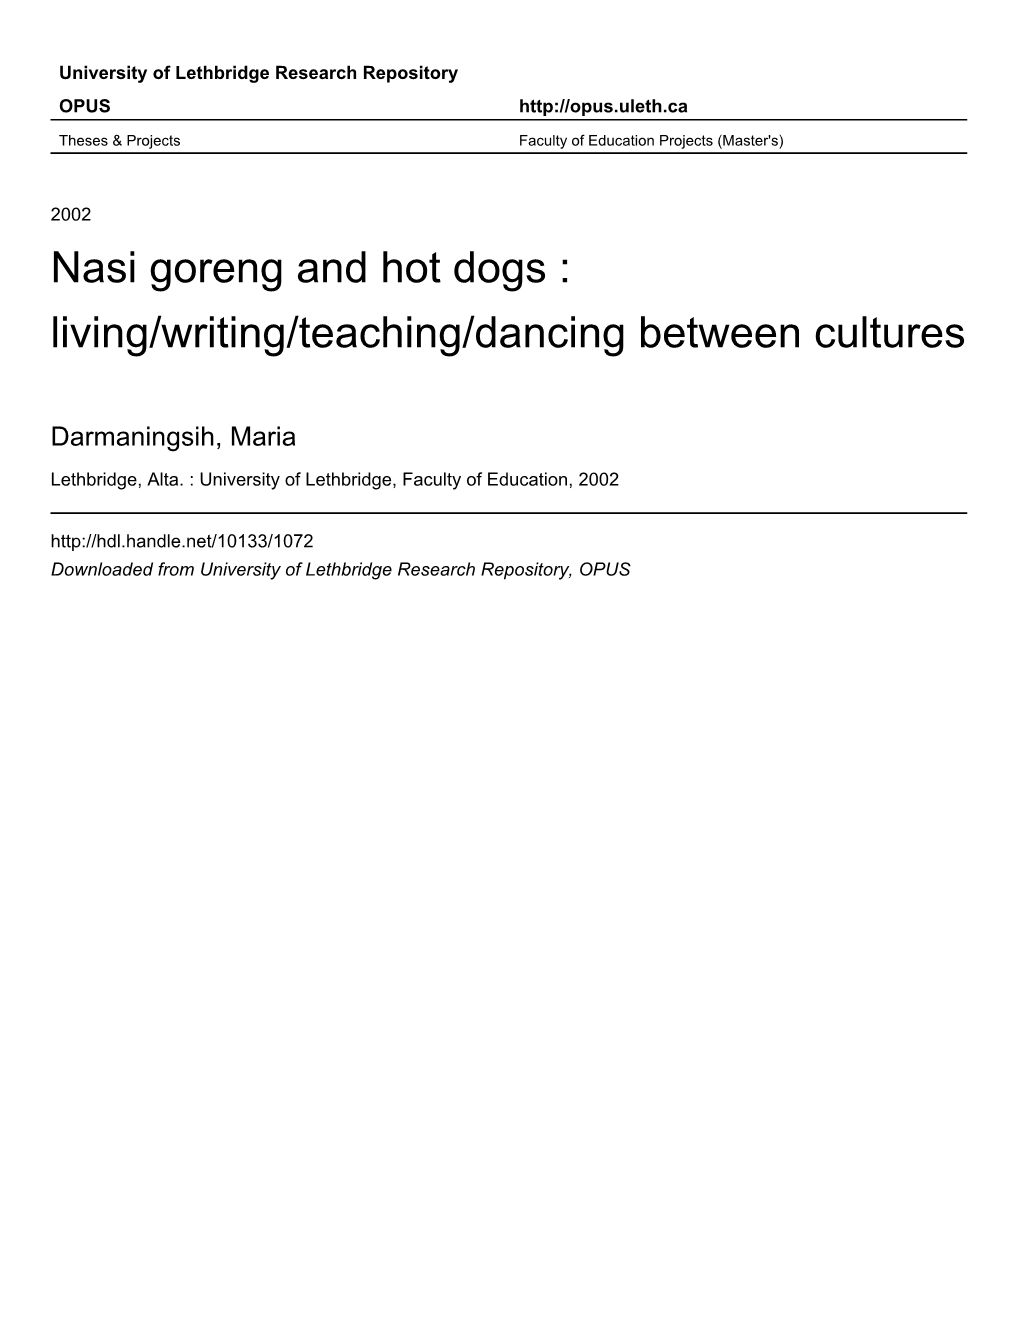 Living/Writing/Teaching/Dancing Between Cultures